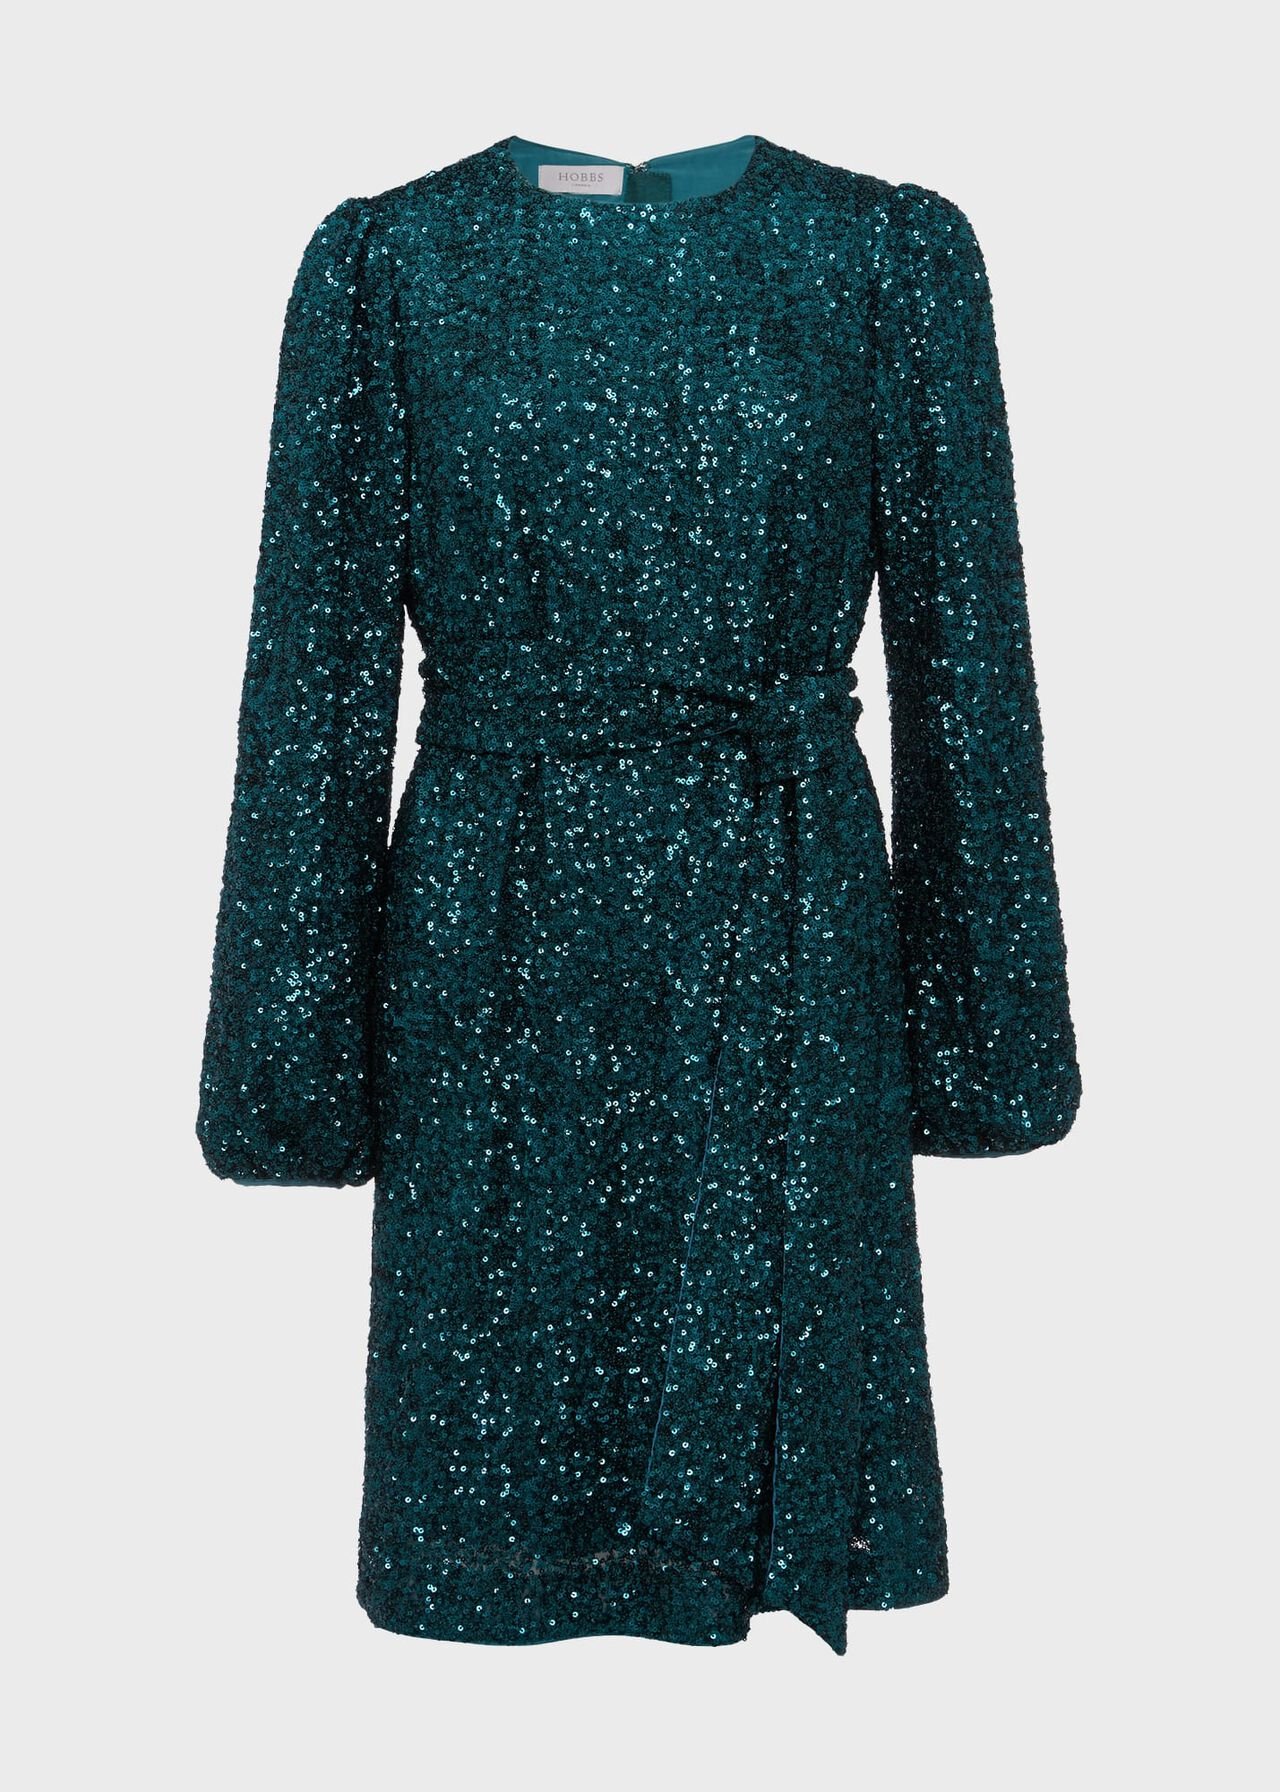 Bette Sequin Dress, Evergreen, hi-res